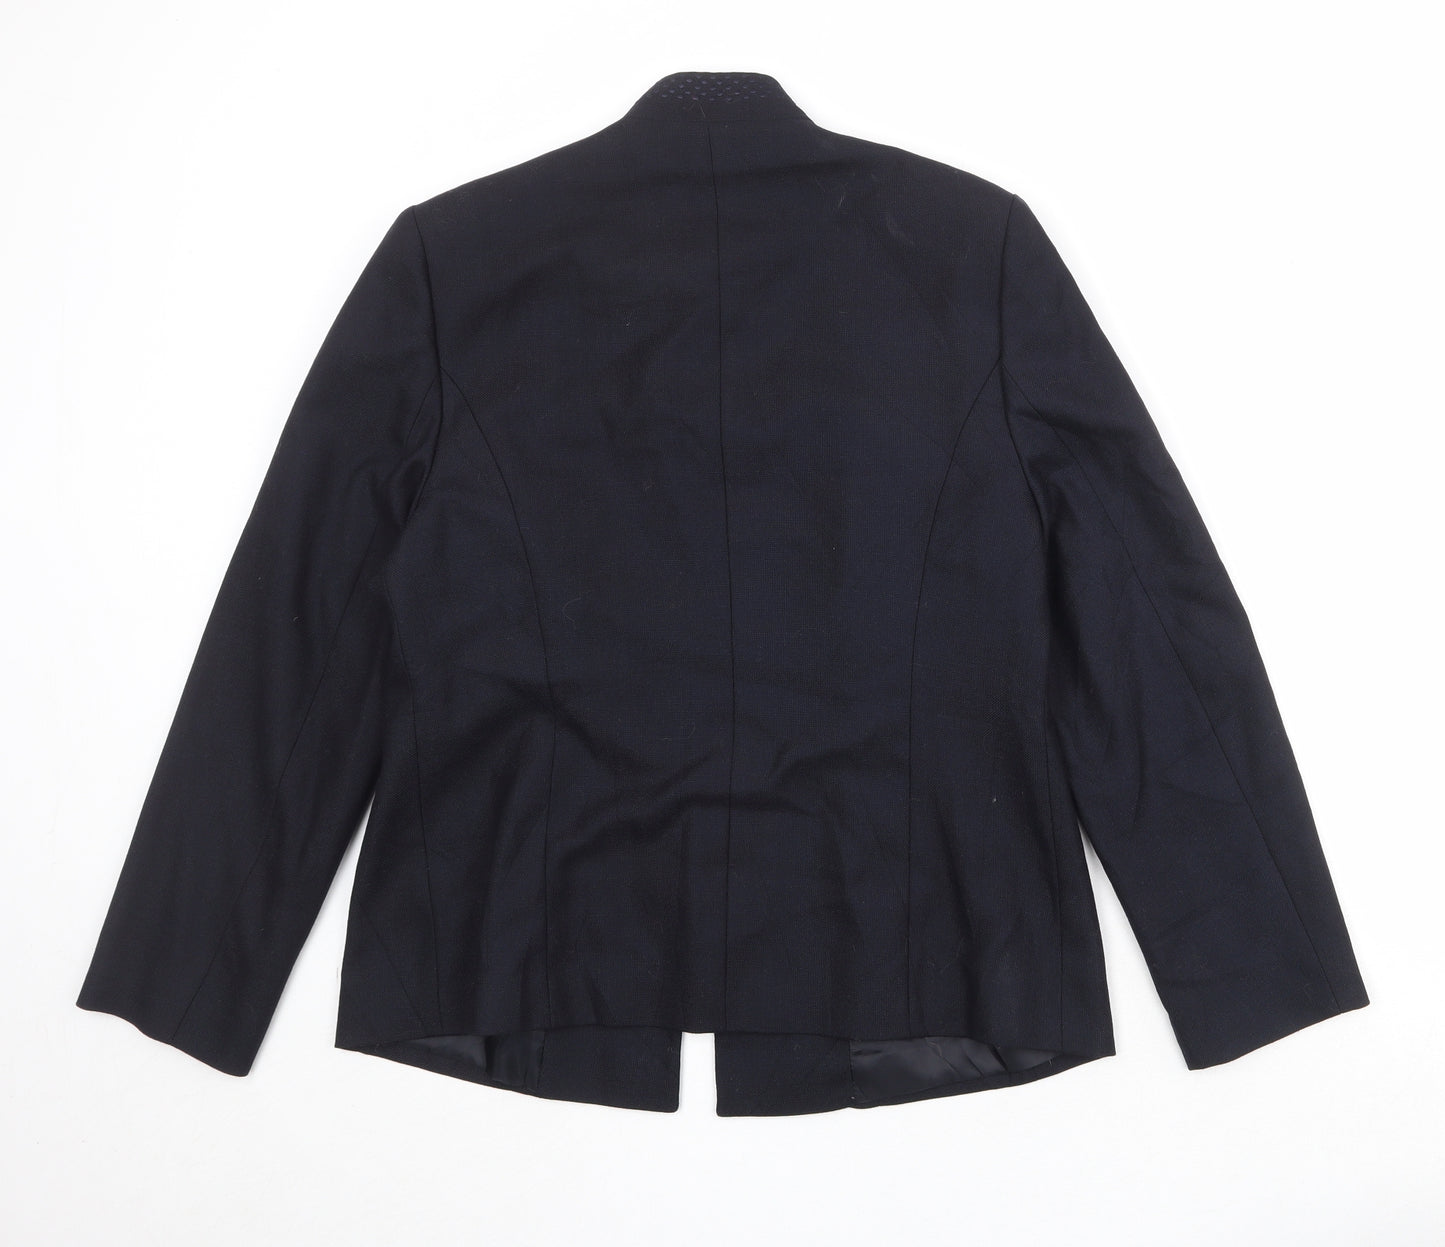 Viyella Womens Black Polyester Jacket Blazer Size 14 - Ten-Button Jacket Front